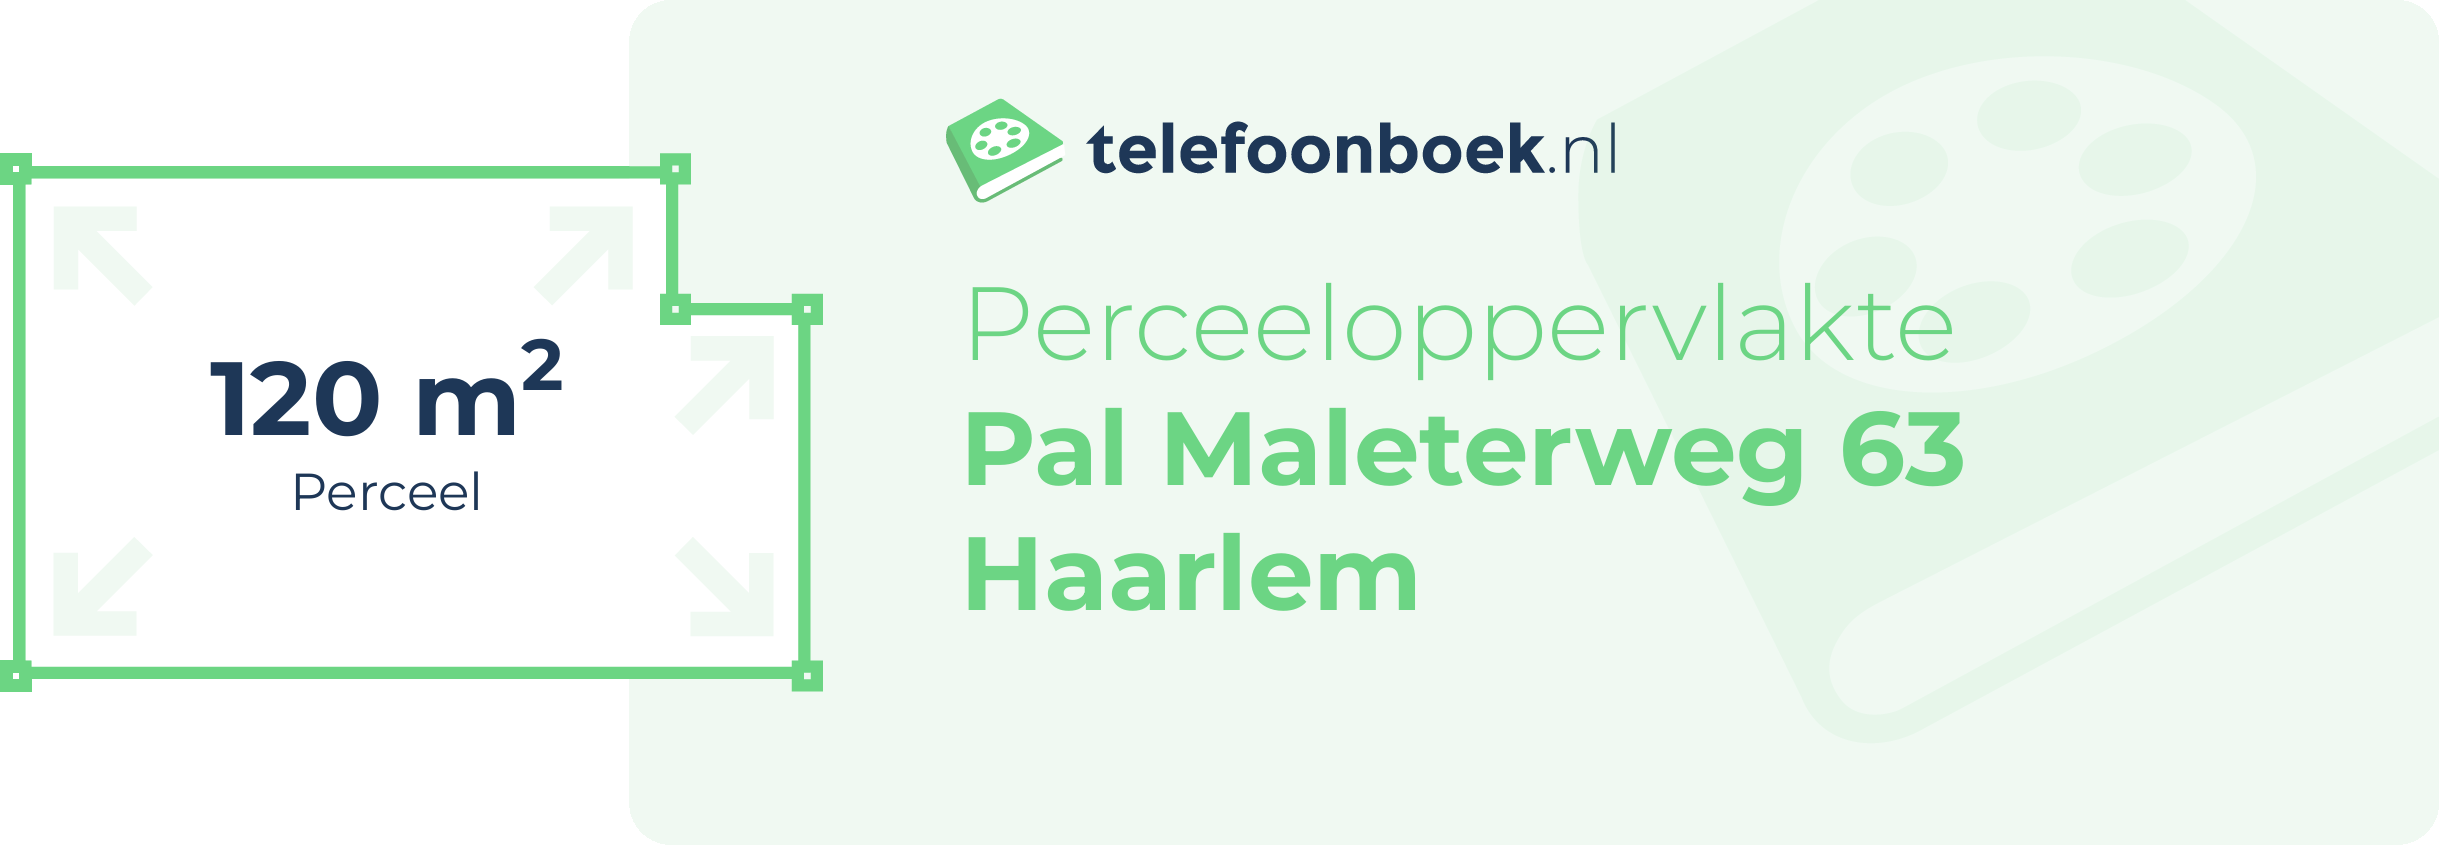 Perceeloppervlakte Pal Maleterweg 63 Haarlem